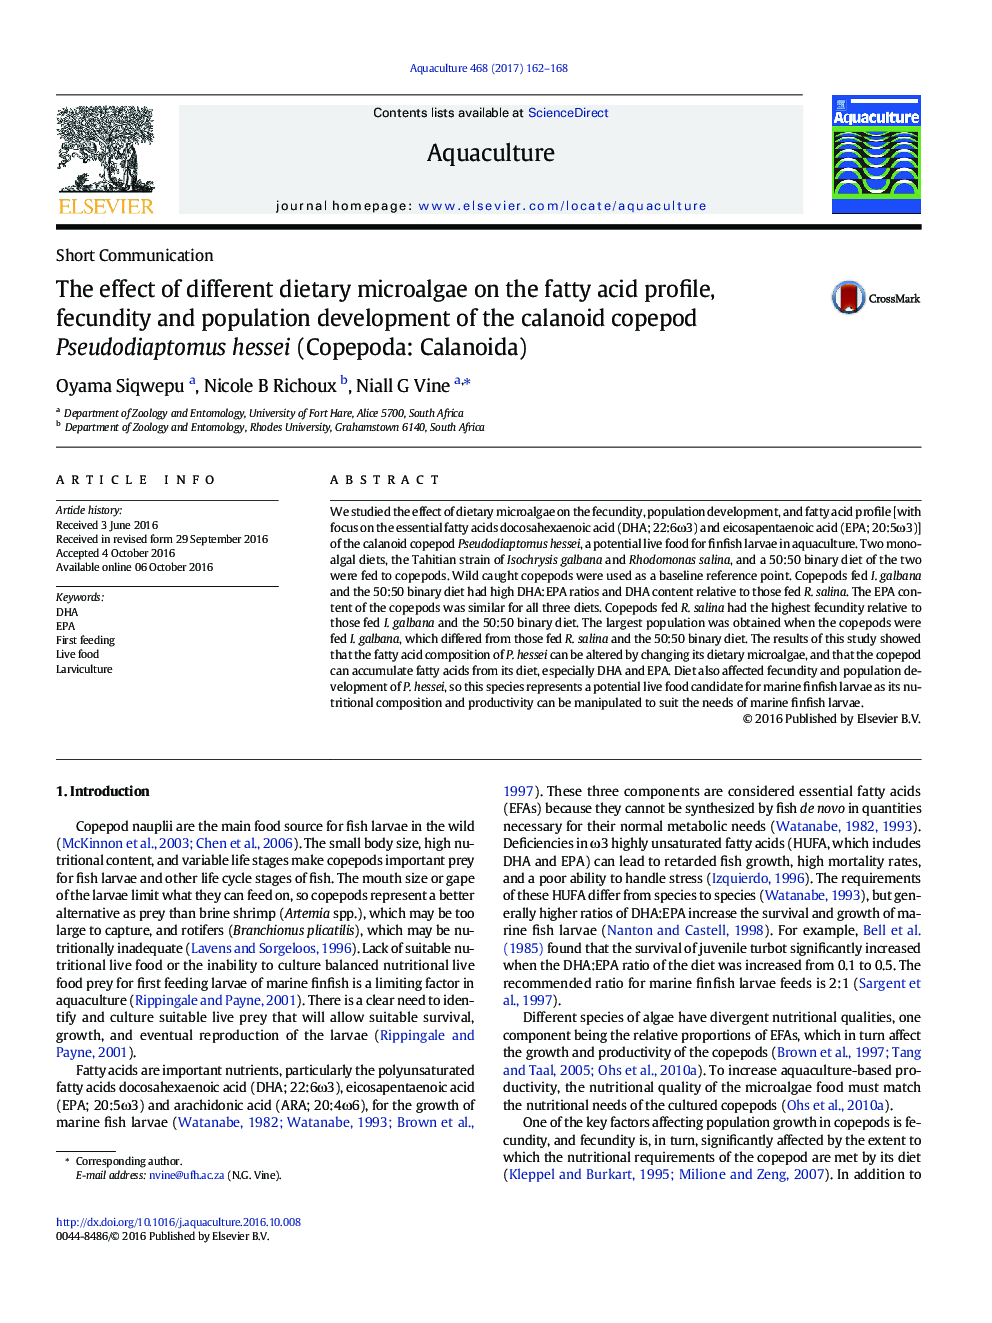 The effect of different dietary microalgae on the fatty acid profile, fecundity and population development of the calanoid copepod Pseudodiaptomus hessei (Copepoda: Calanoida)